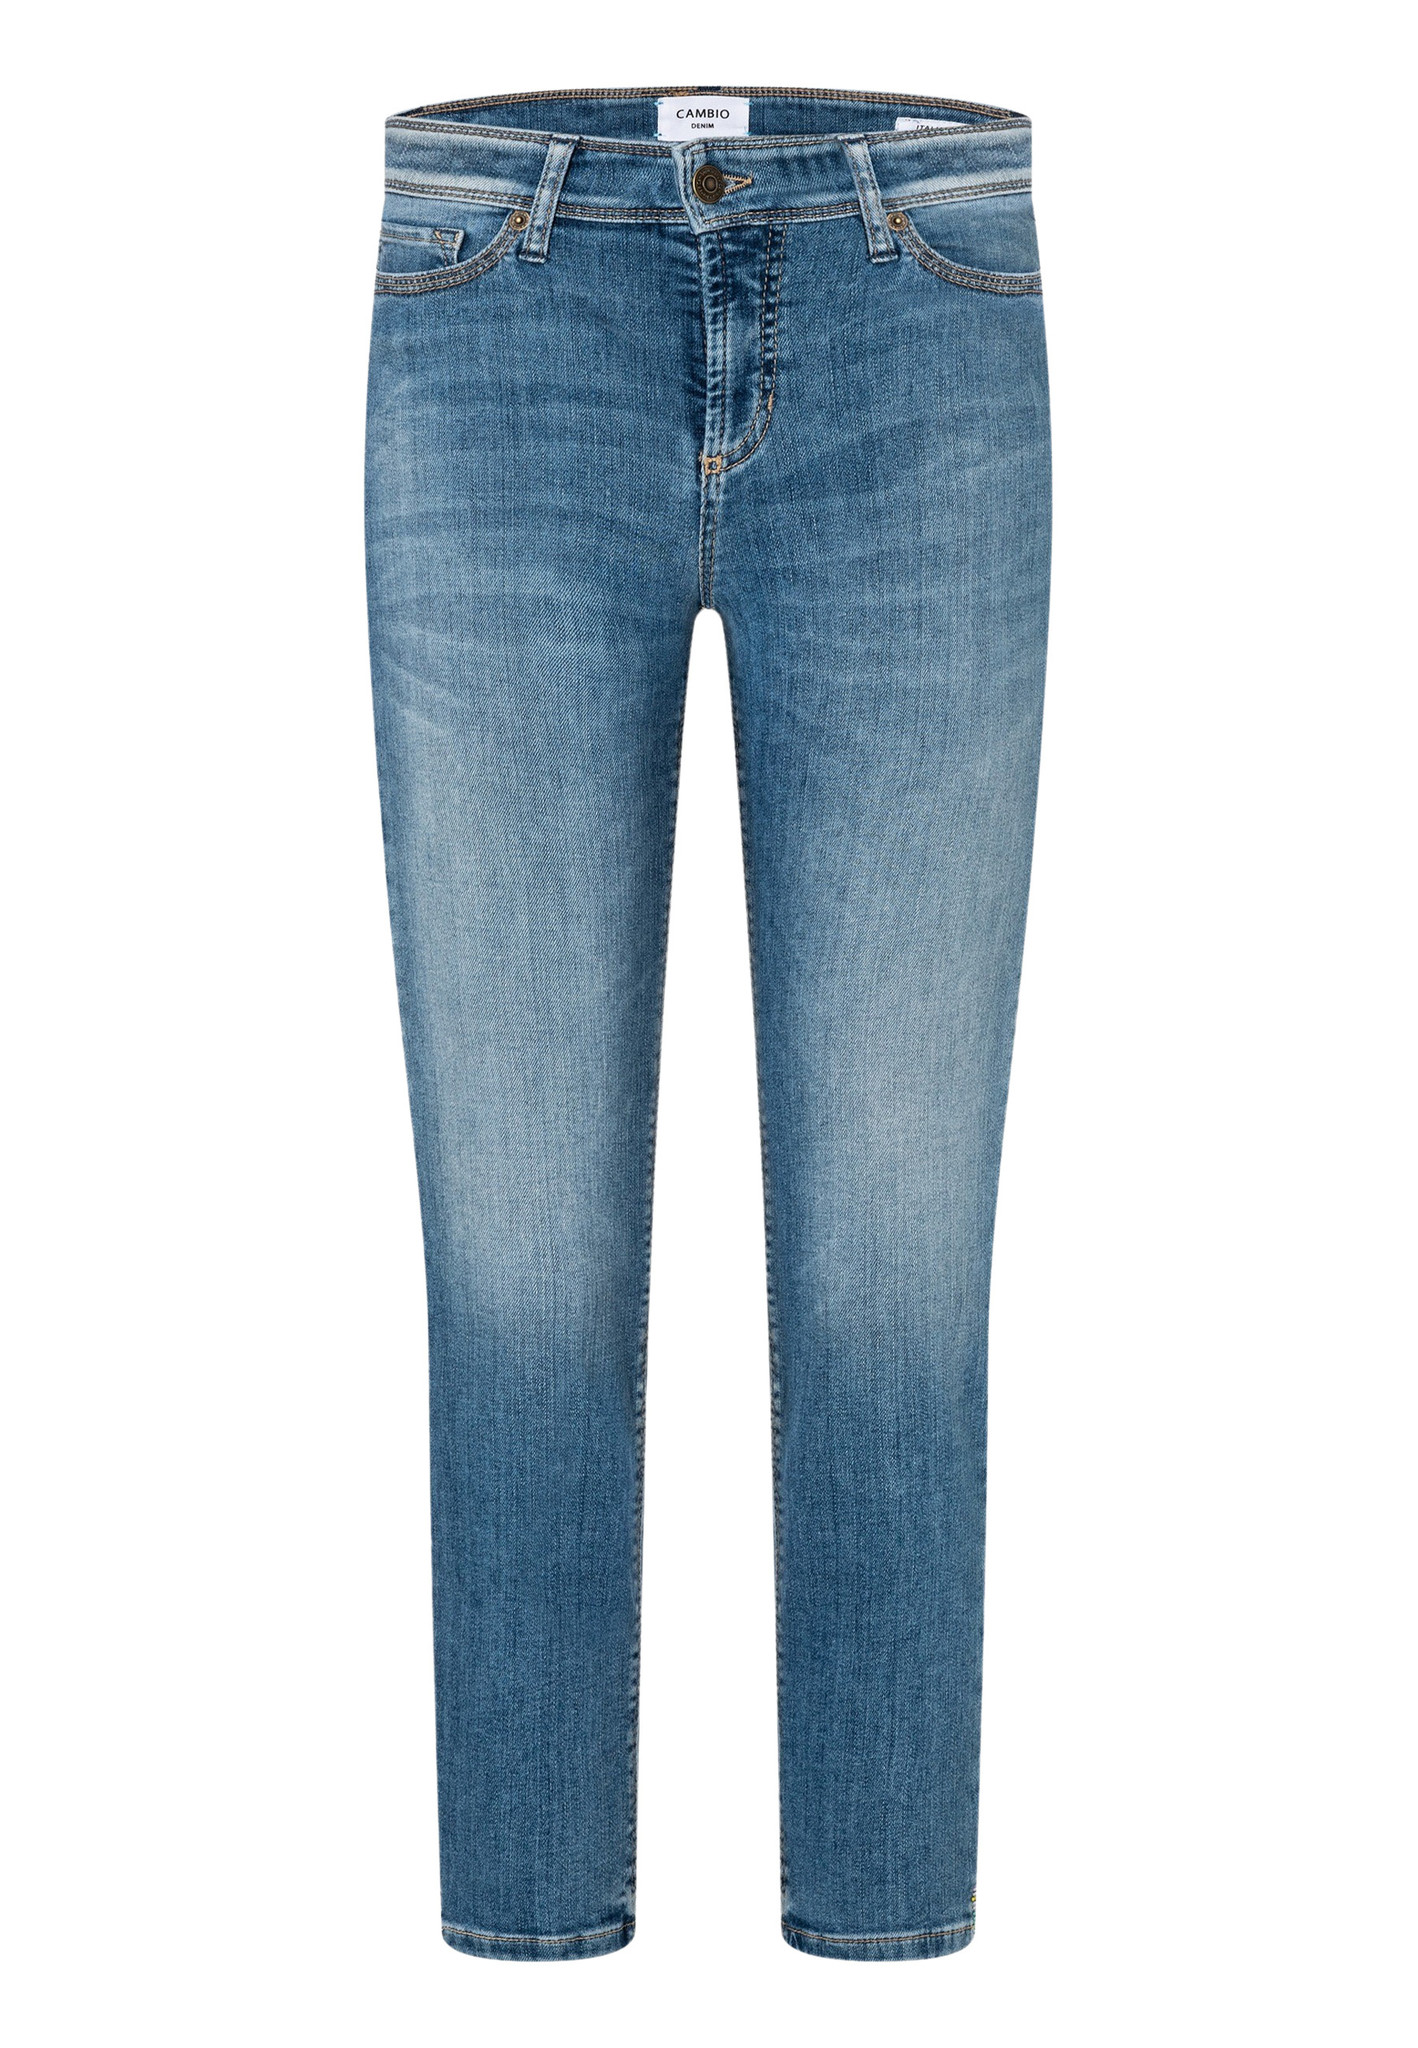 Cambio jeans lichtblauw Dames maat 40